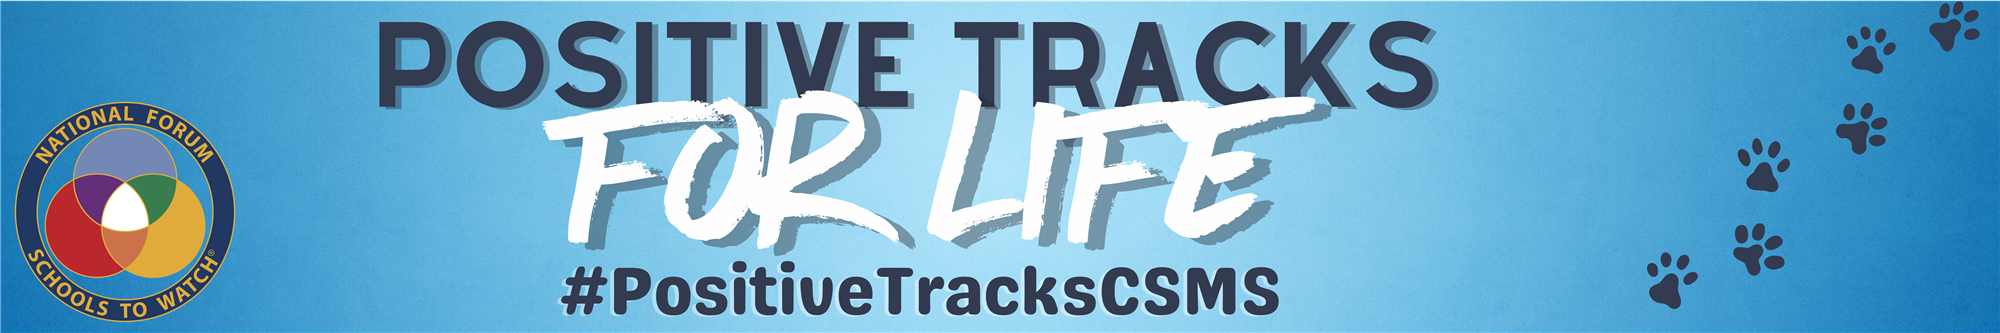 Positive tracks for life #PositiveTracksCSMS